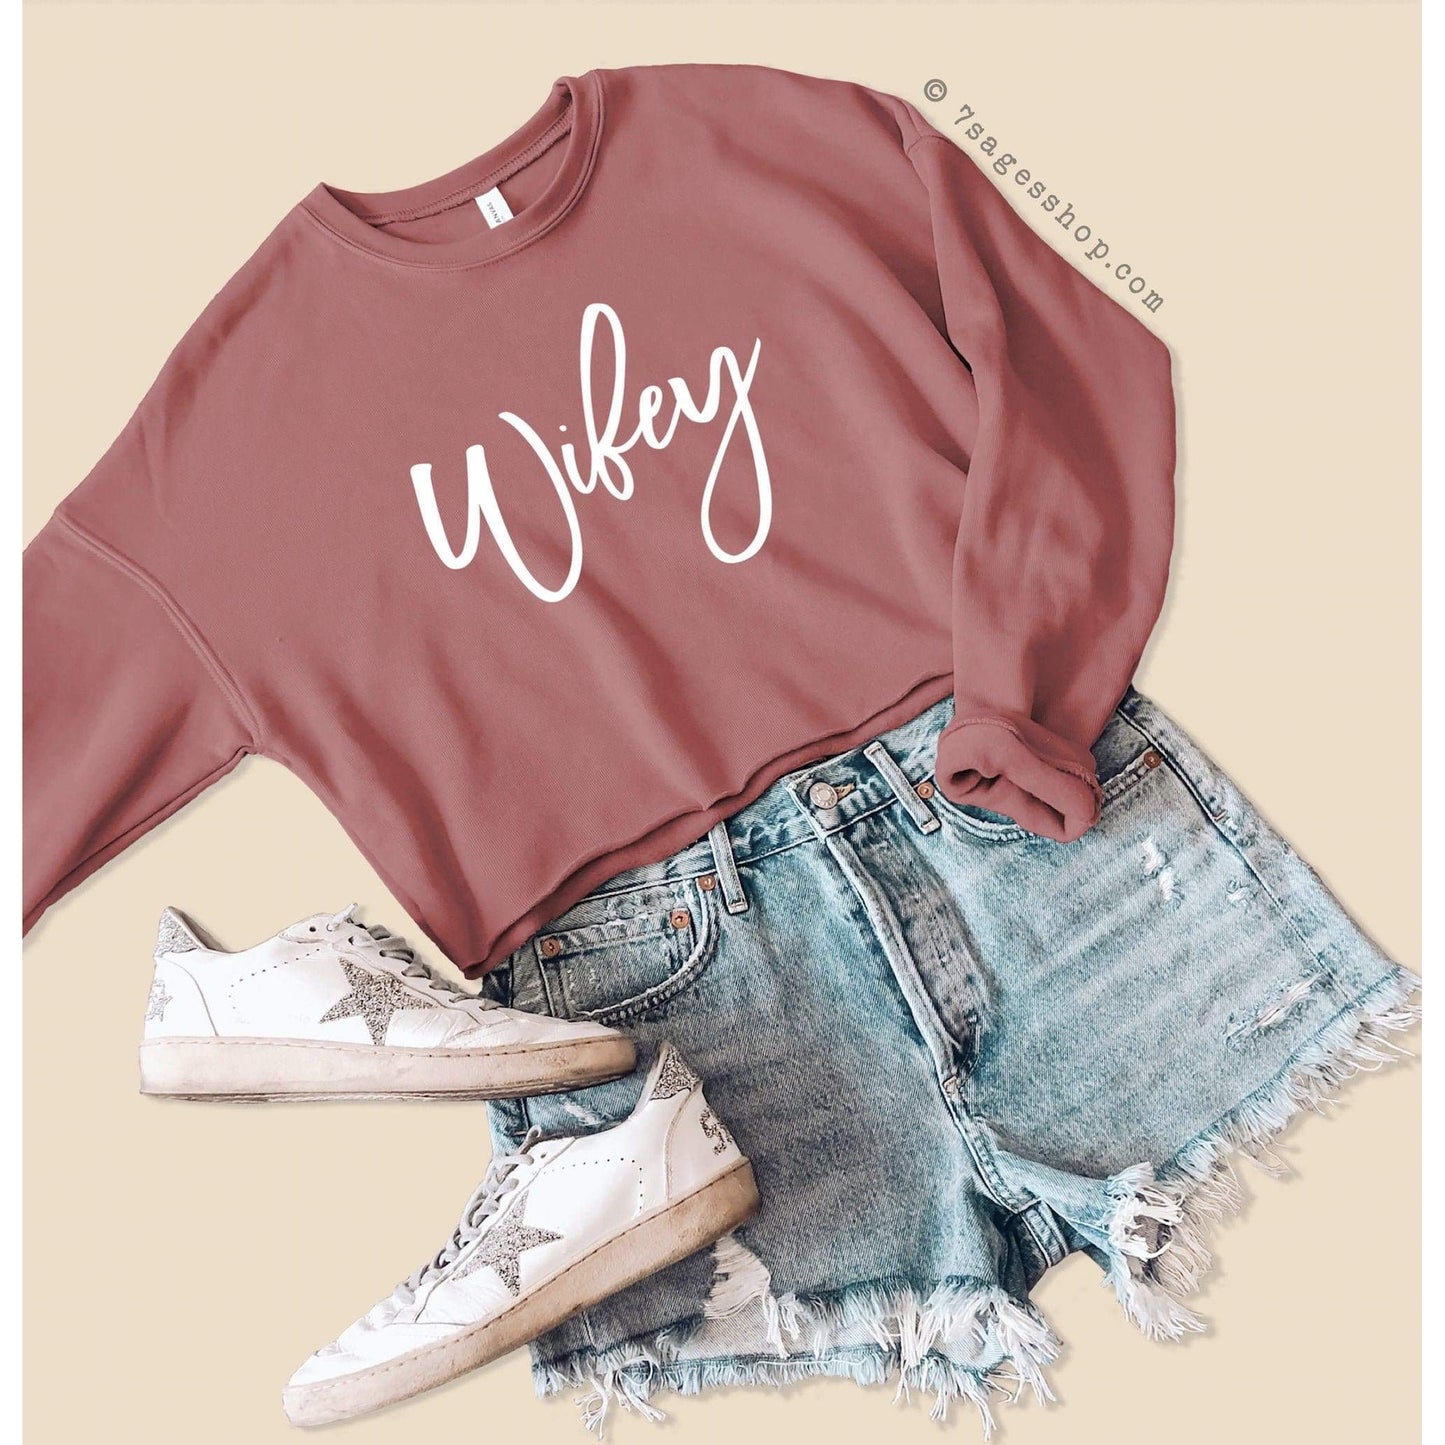 Wifey Sweatshirt - Wifey Cropped Sweatshirt - Engagement Gifts - Wife Gift - Wifey Crop Top - Fleece Sweater - Wifey Sweater